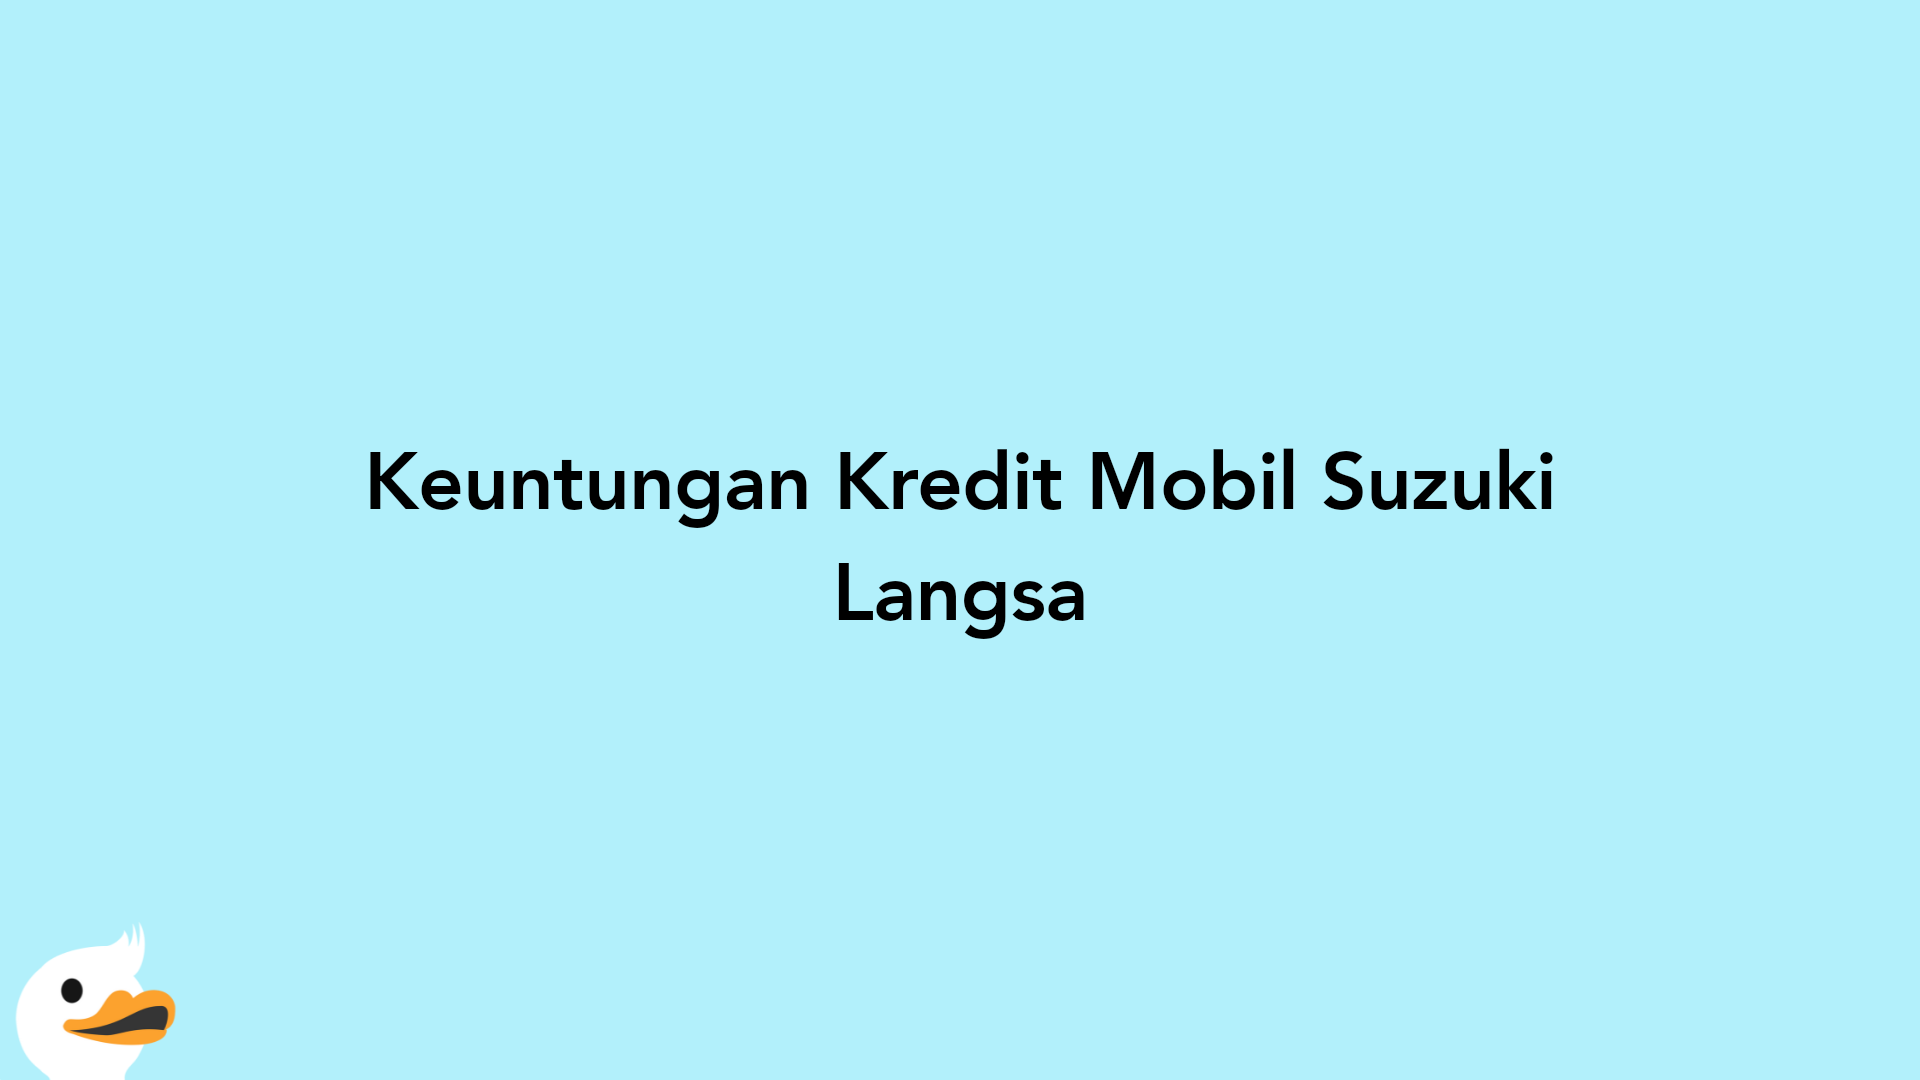 Keuntungan Kredit Mobil Suzuki Langsa